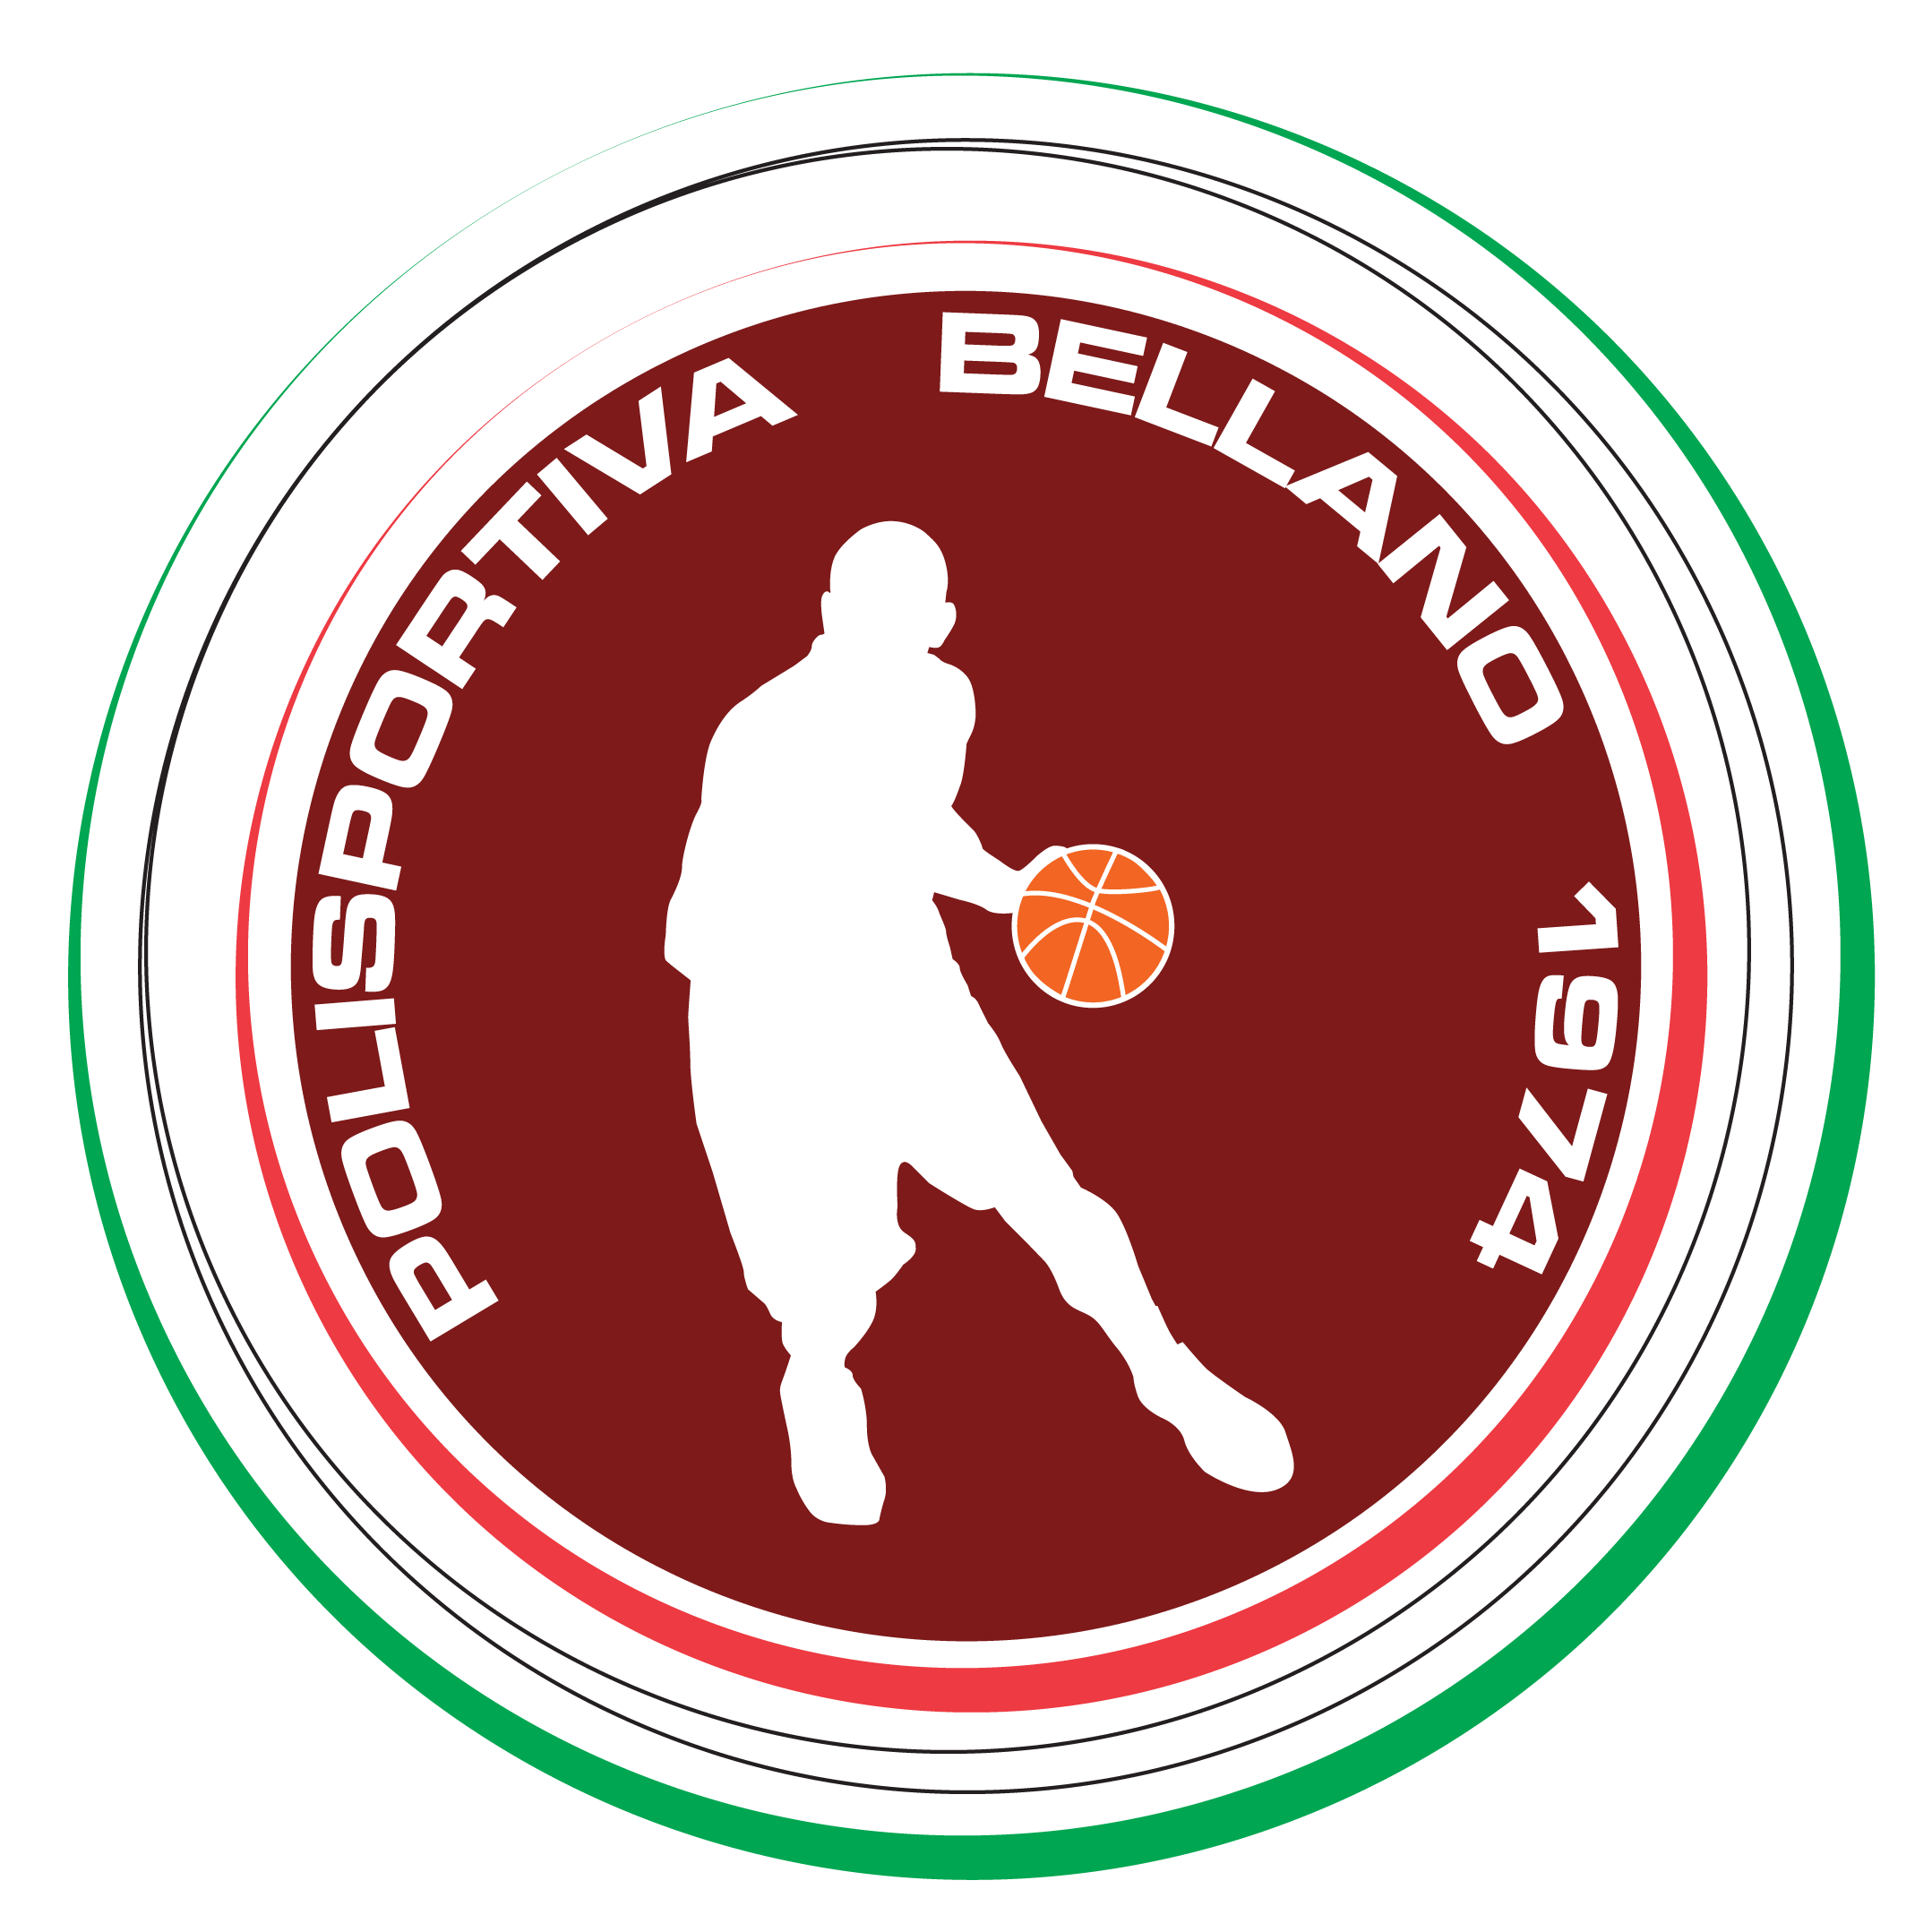 Polisportiva Bellano - Basket